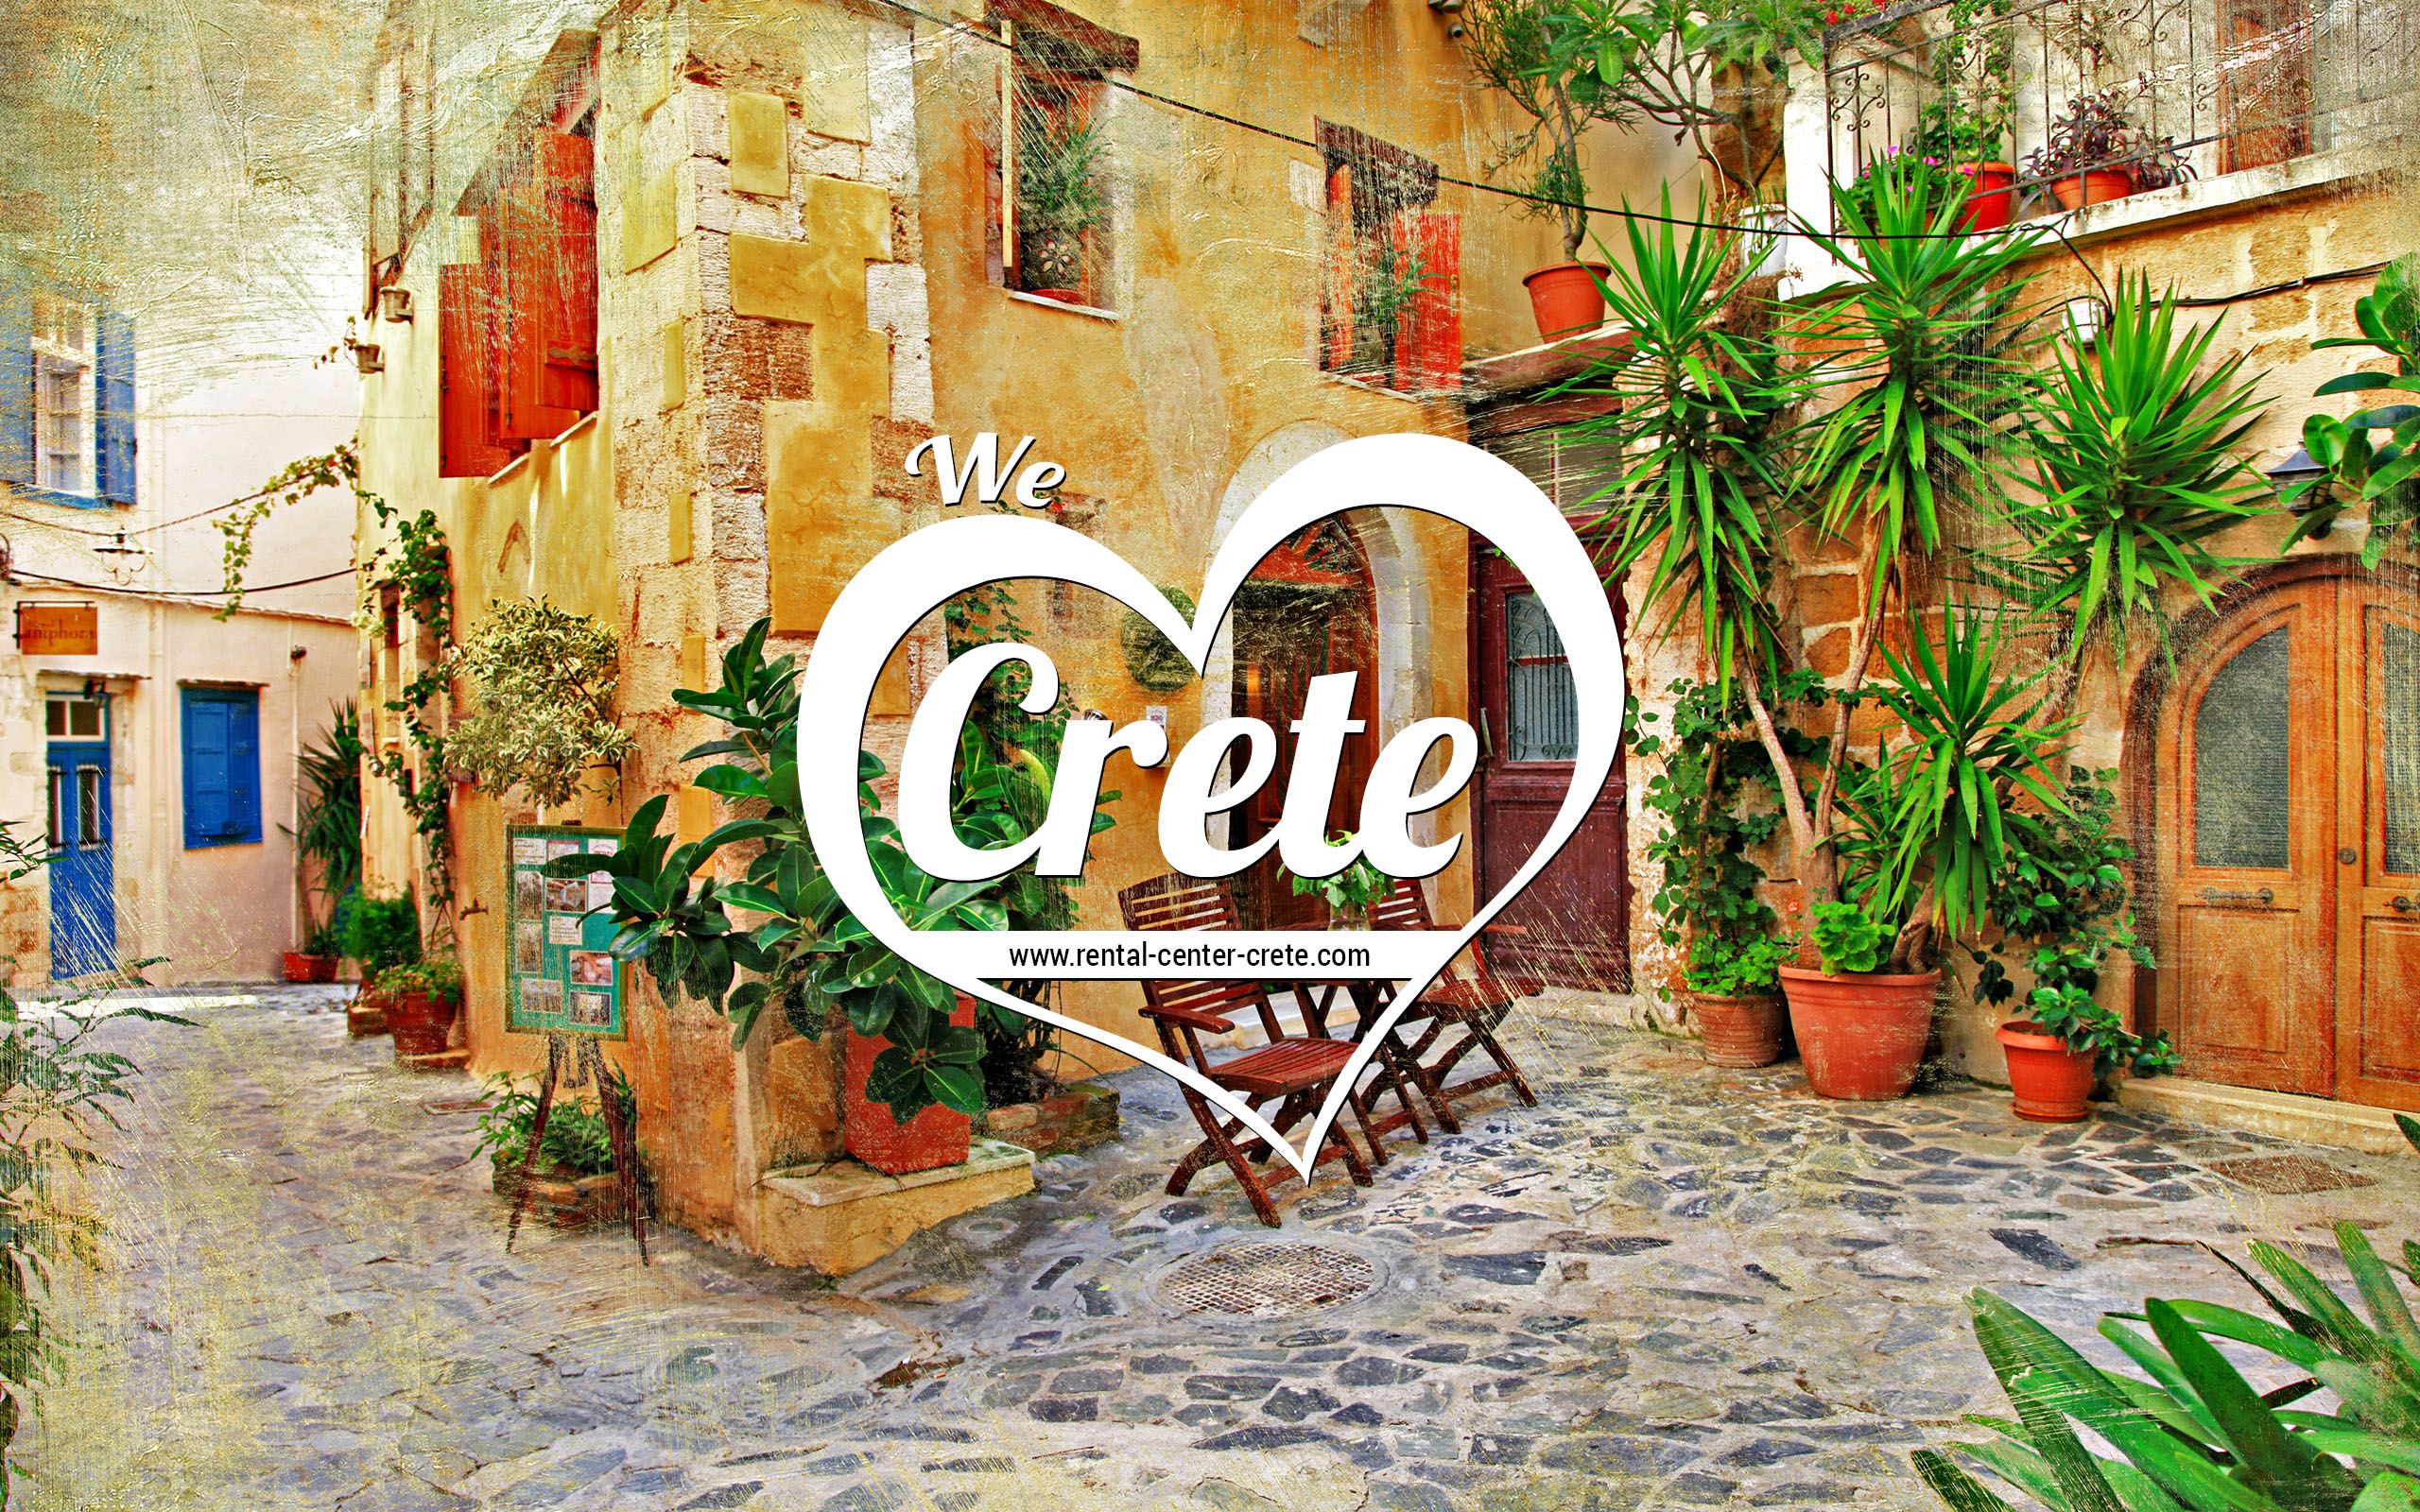 Freebie Wallpaper of Crete. Rental Center Crete